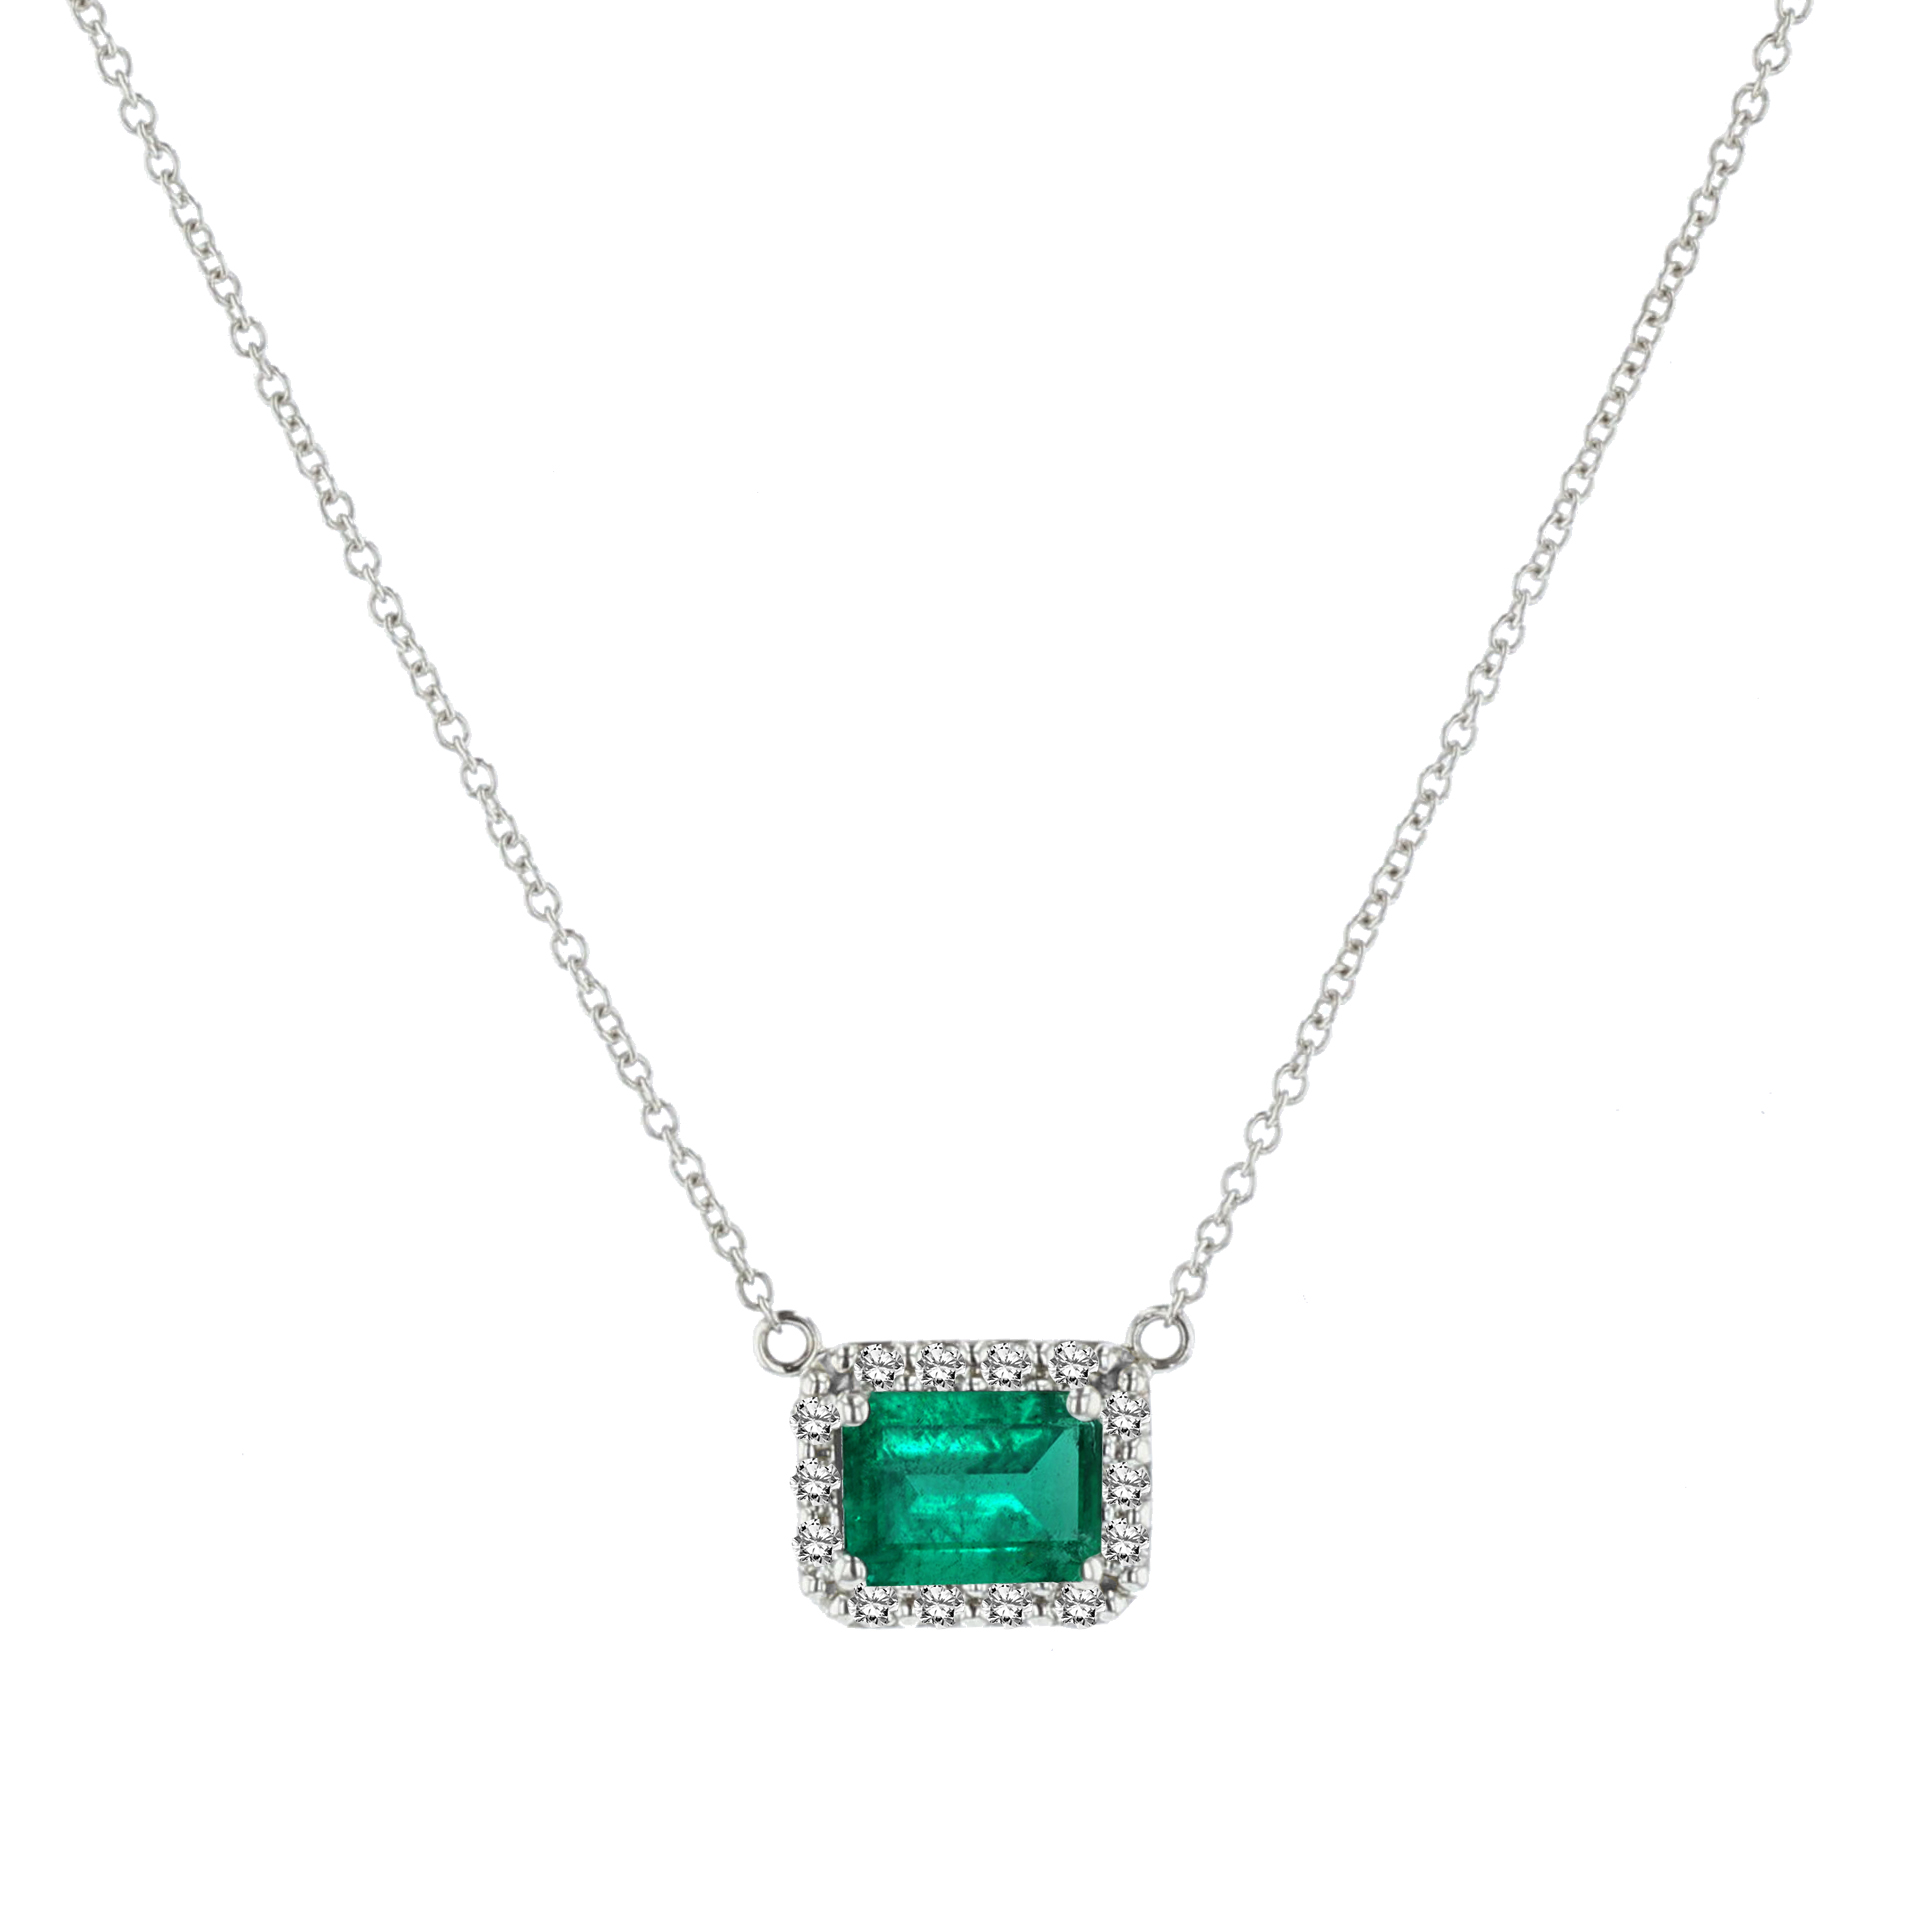 View 0.25ctw Diamond and Emerald Cut Emerald Pendant in 14k White Gold